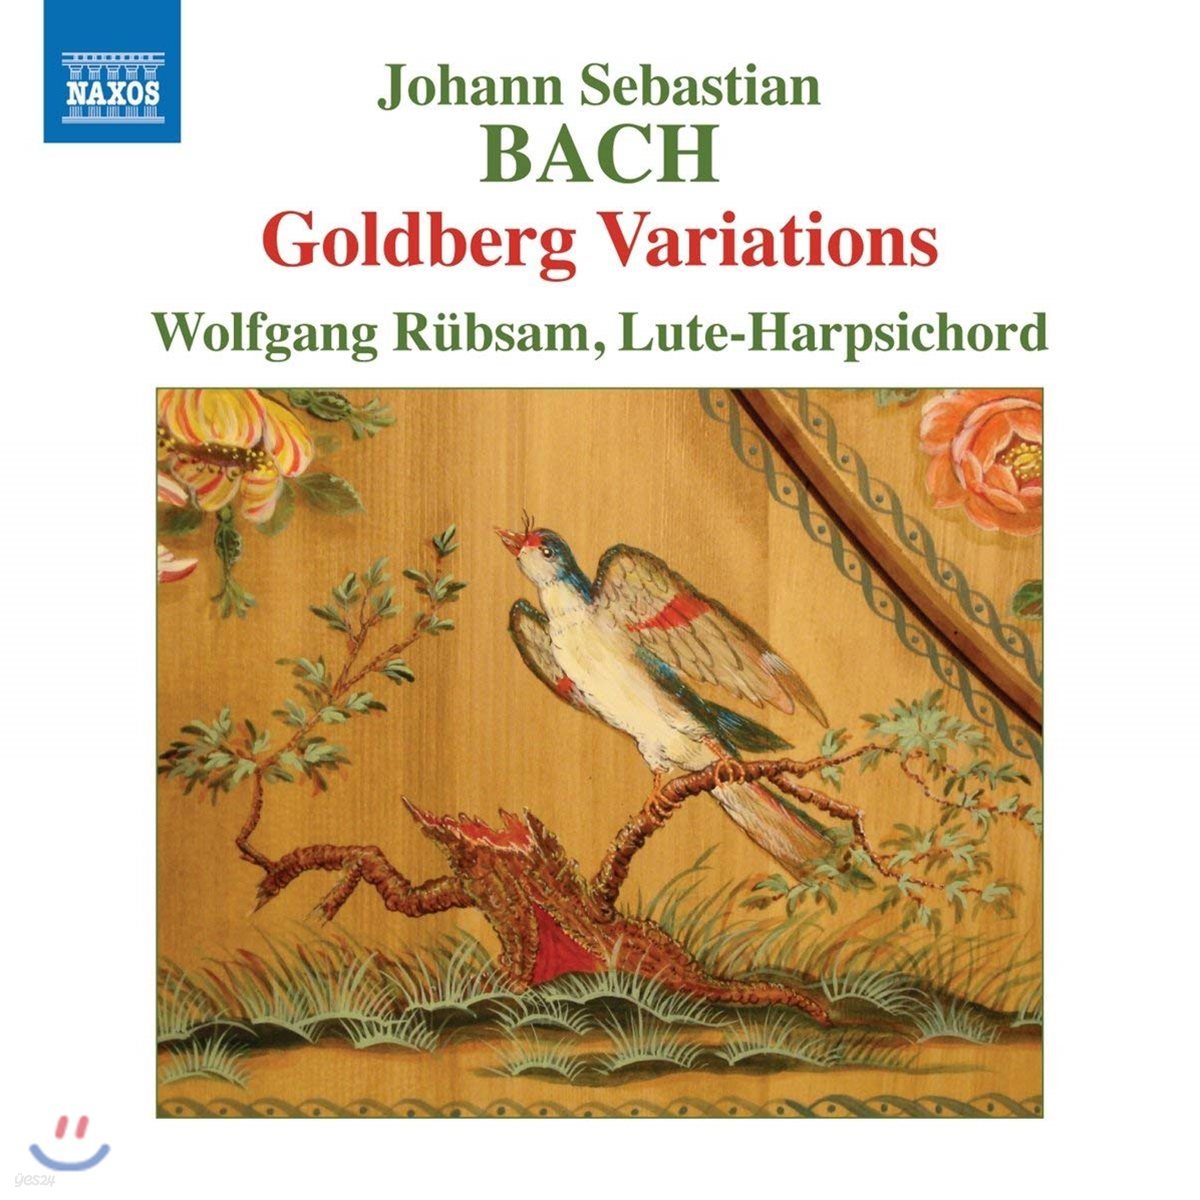 Wolfgang Rubsam  바흐: 골드베르크 변주곡 BWV988 [류트 하프시코드 연주반] (Bach: Goldberg Variations)